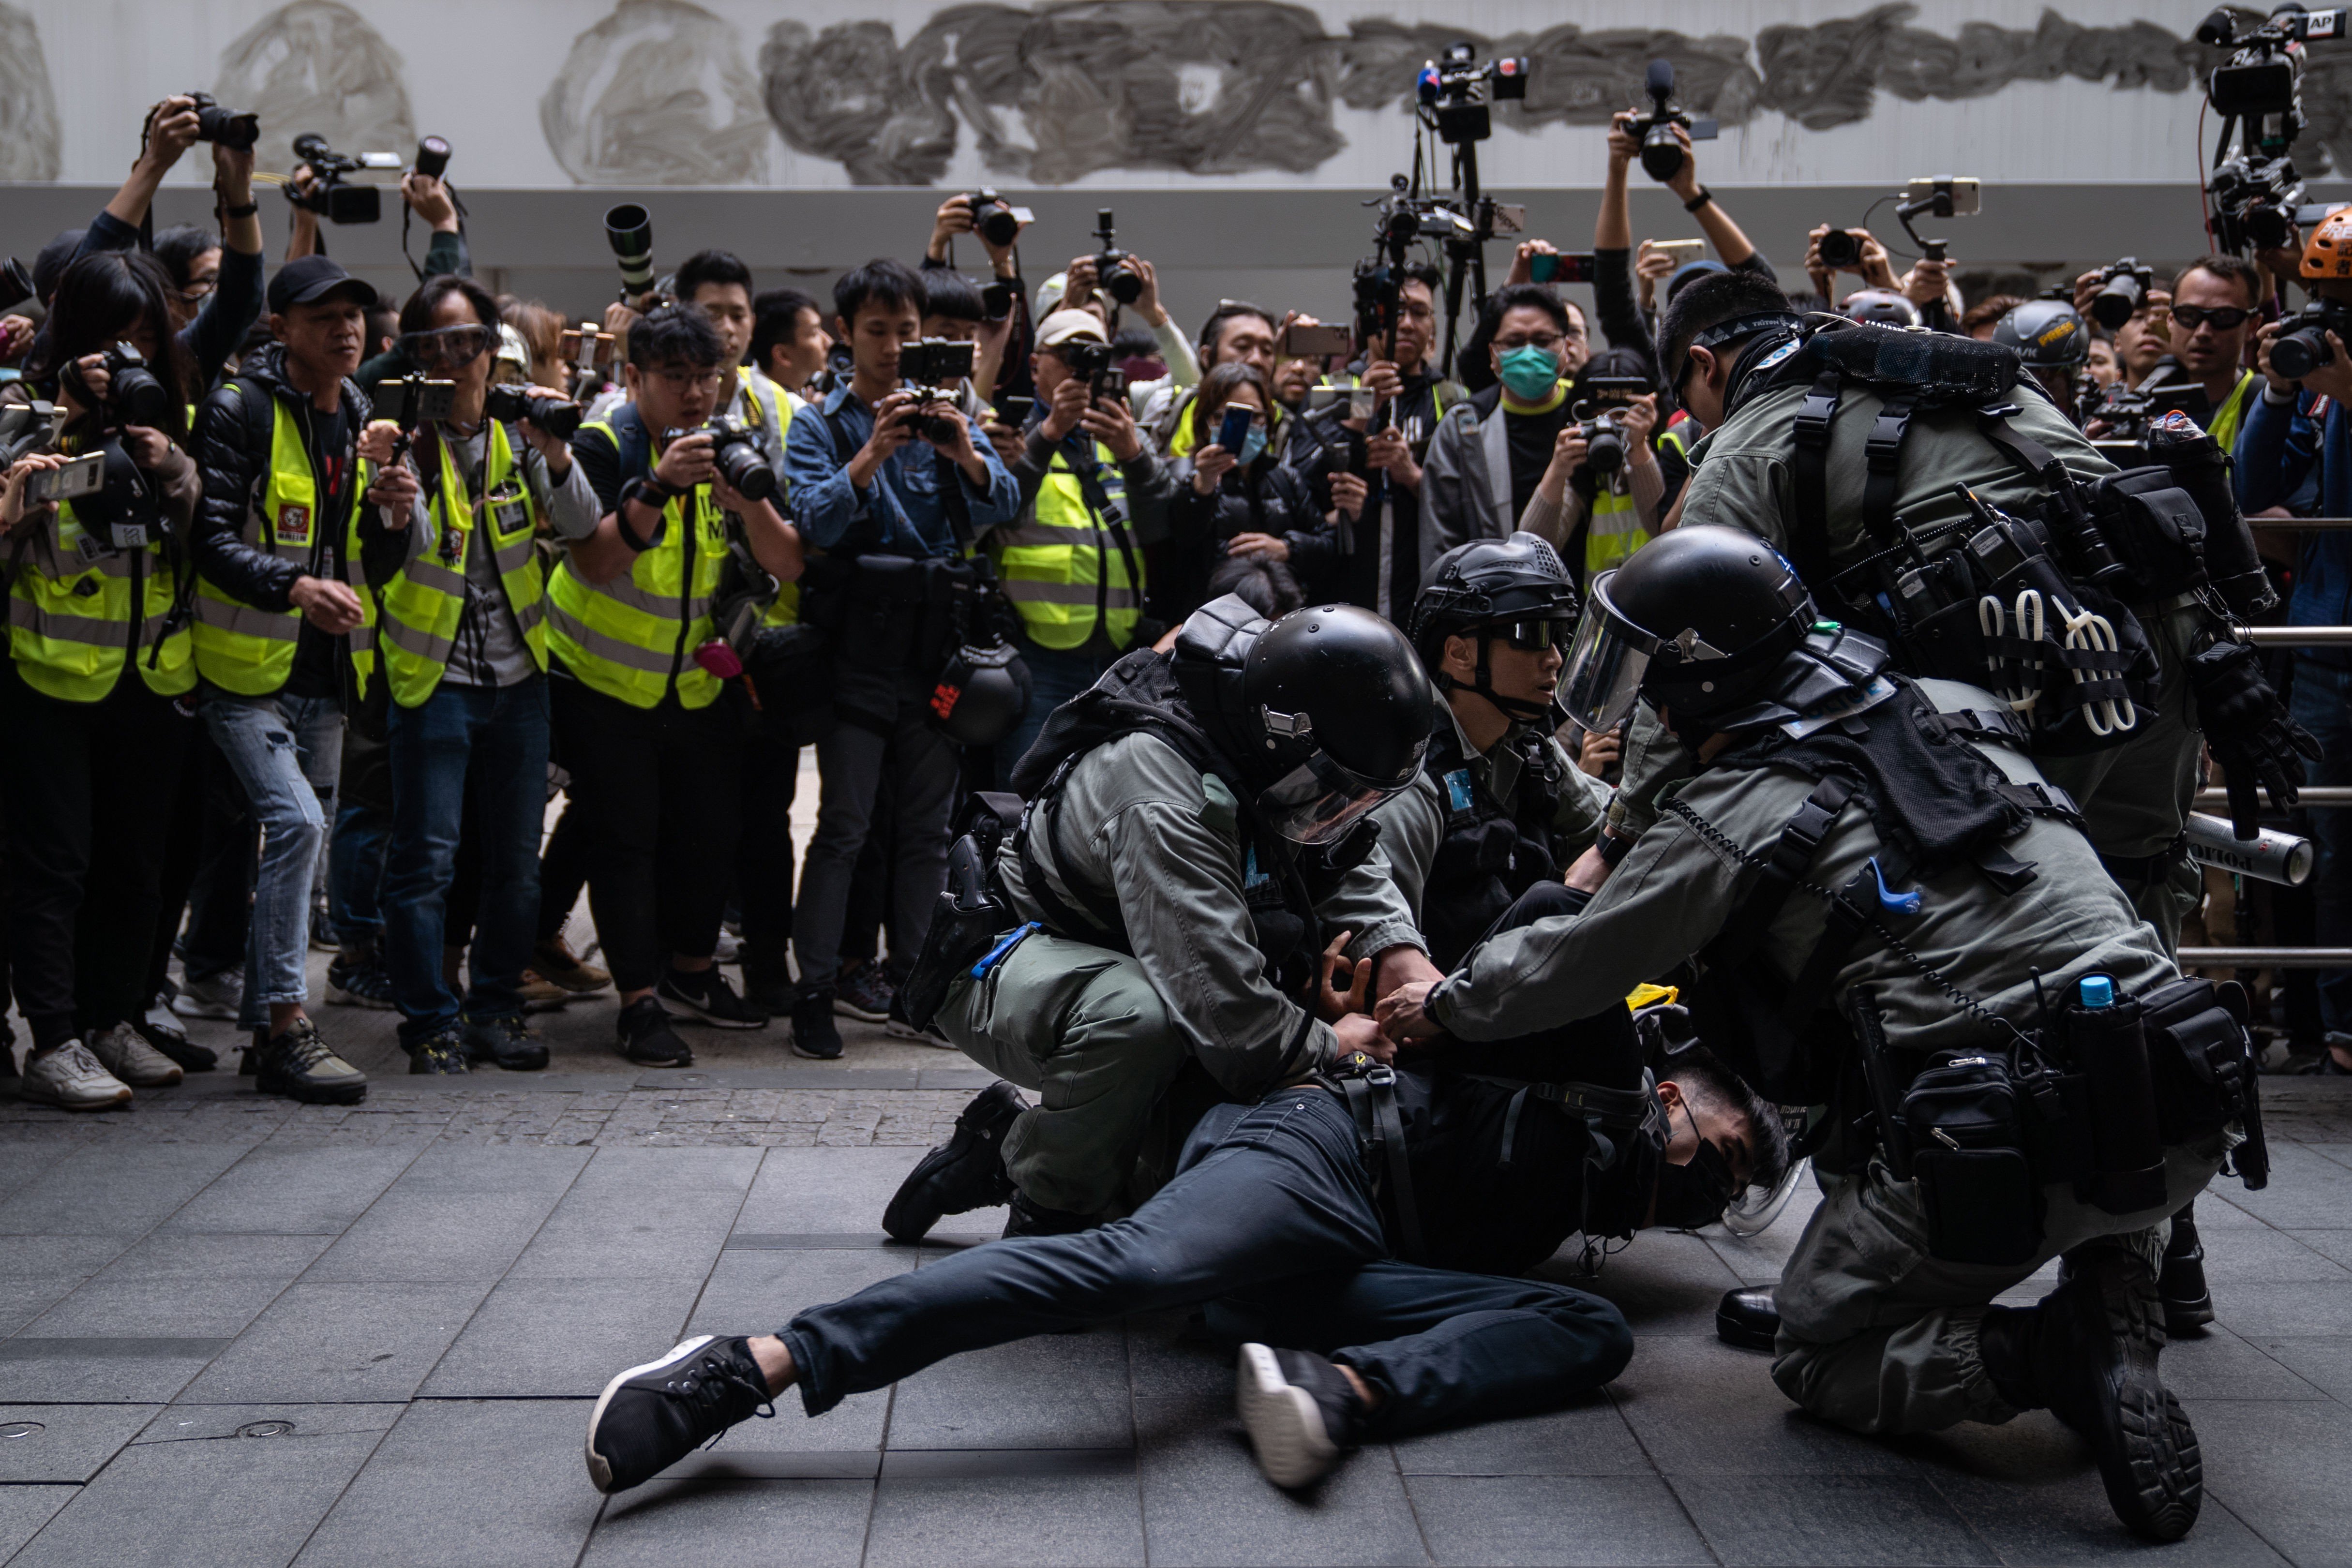 Letter, Tasers and net guns for Hong Kong police? Bad idea